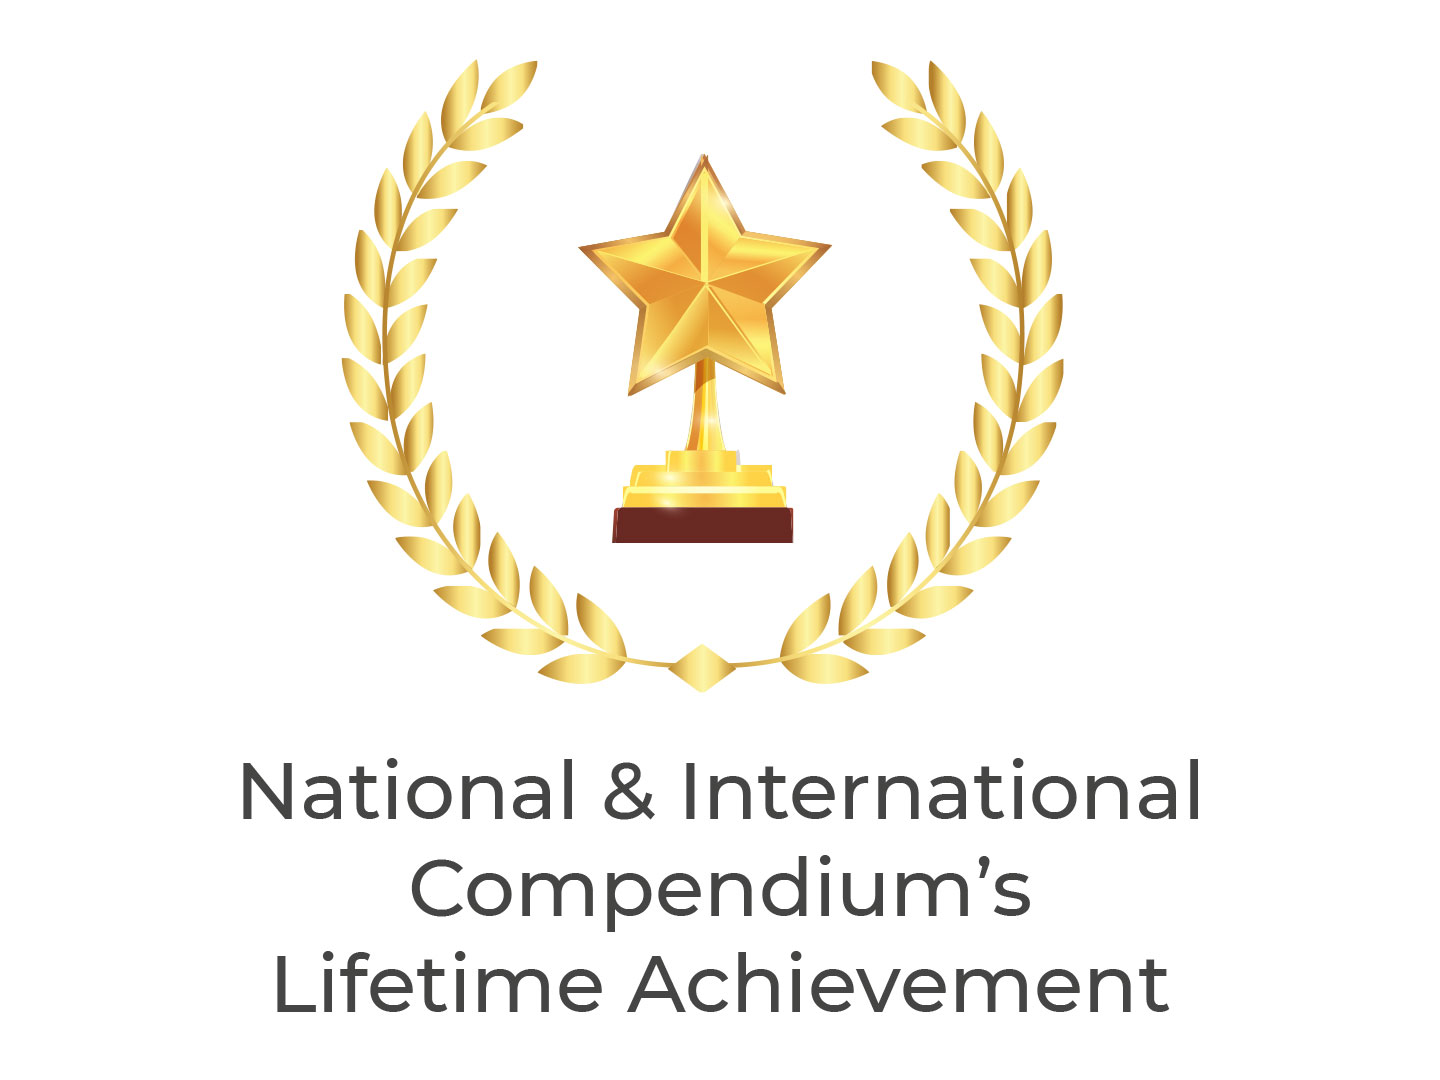 National & International Compendium's Lifetime Achievement